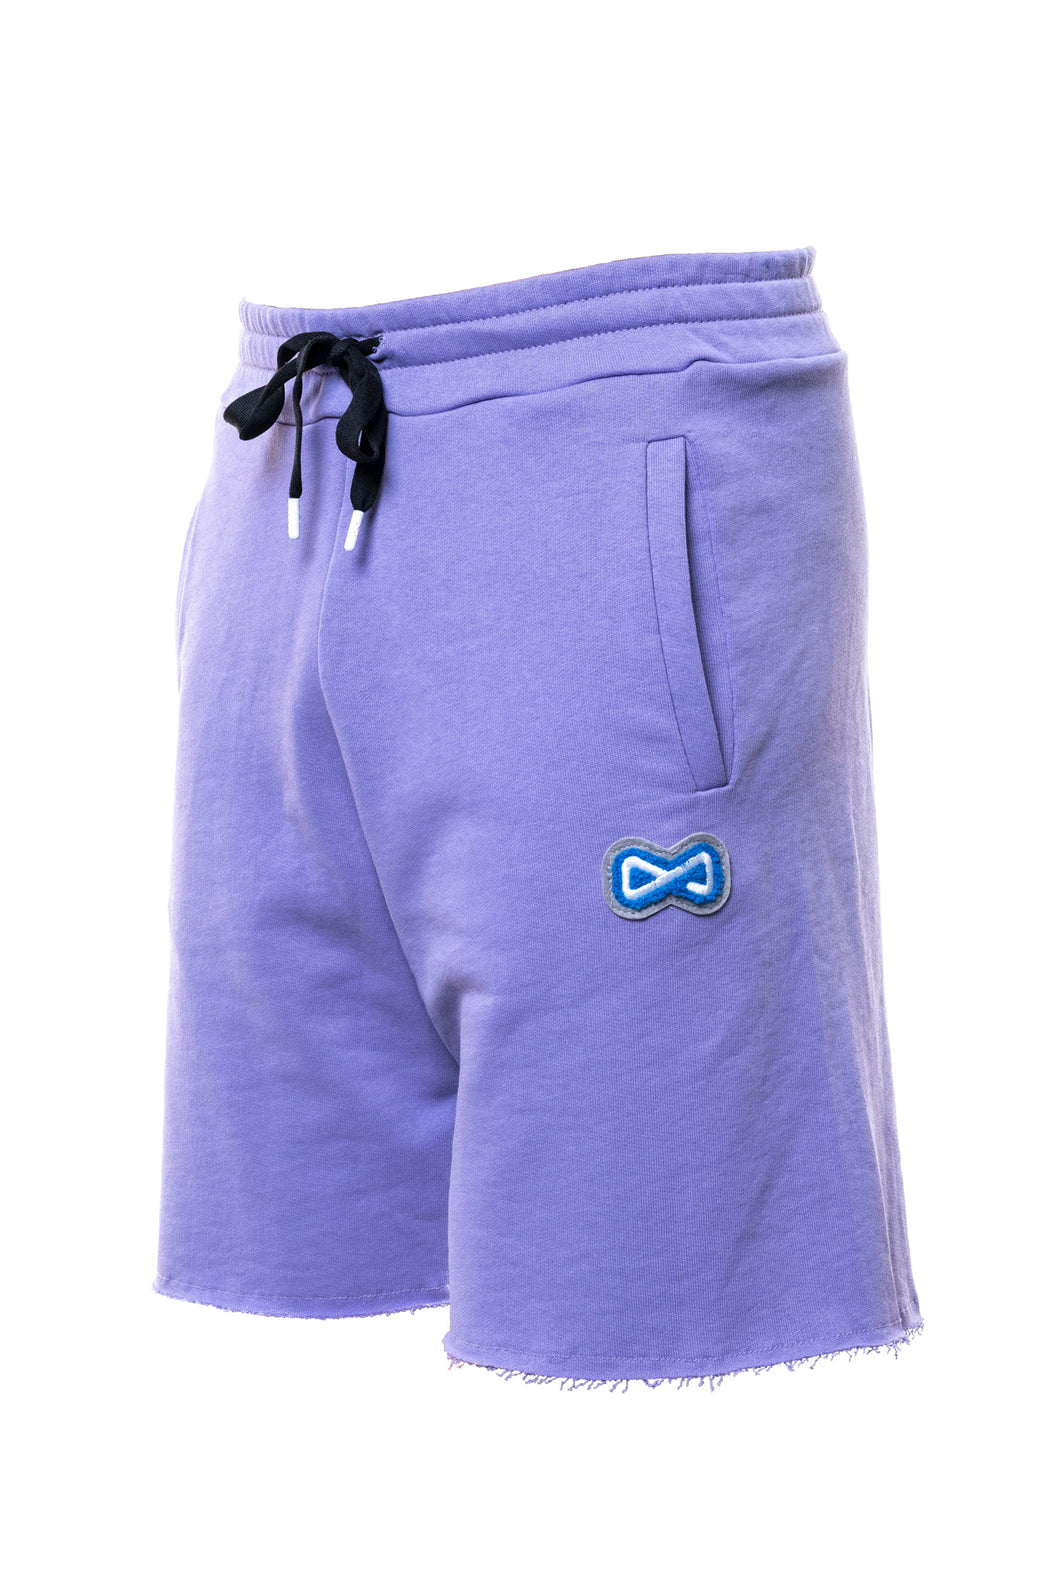 Lilac cotton bermuda shorts